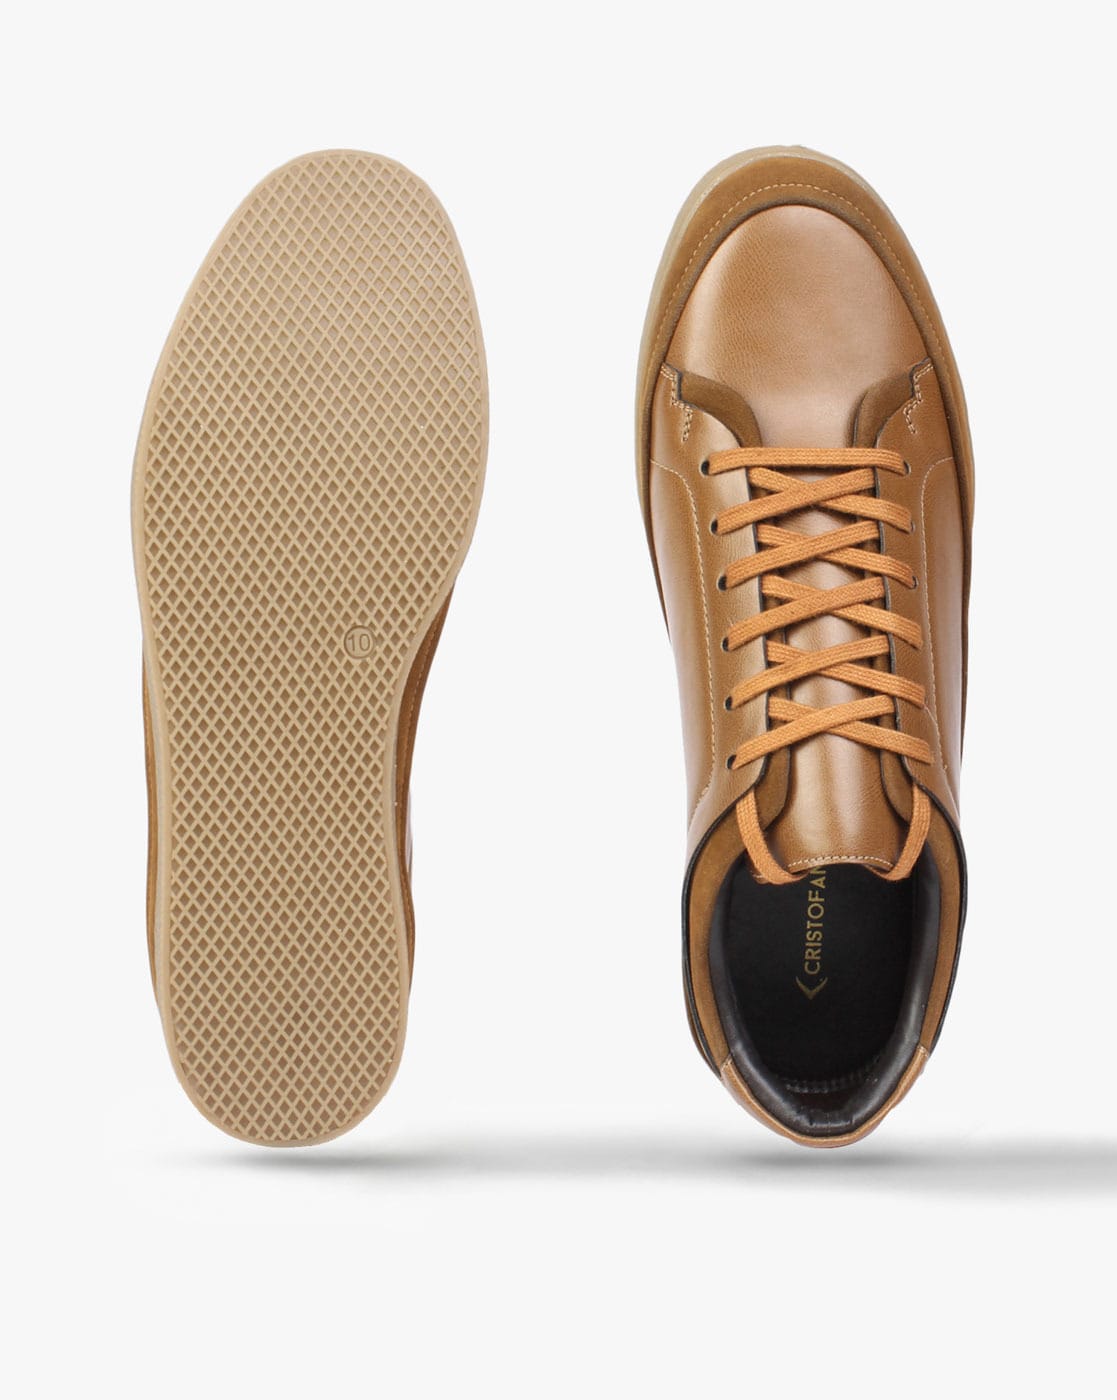 BRITISH KNIGHTS Tan Brown Suede Low Top Fashion Sneaker Shoes Men SZ 11 UK  12 US | eBay